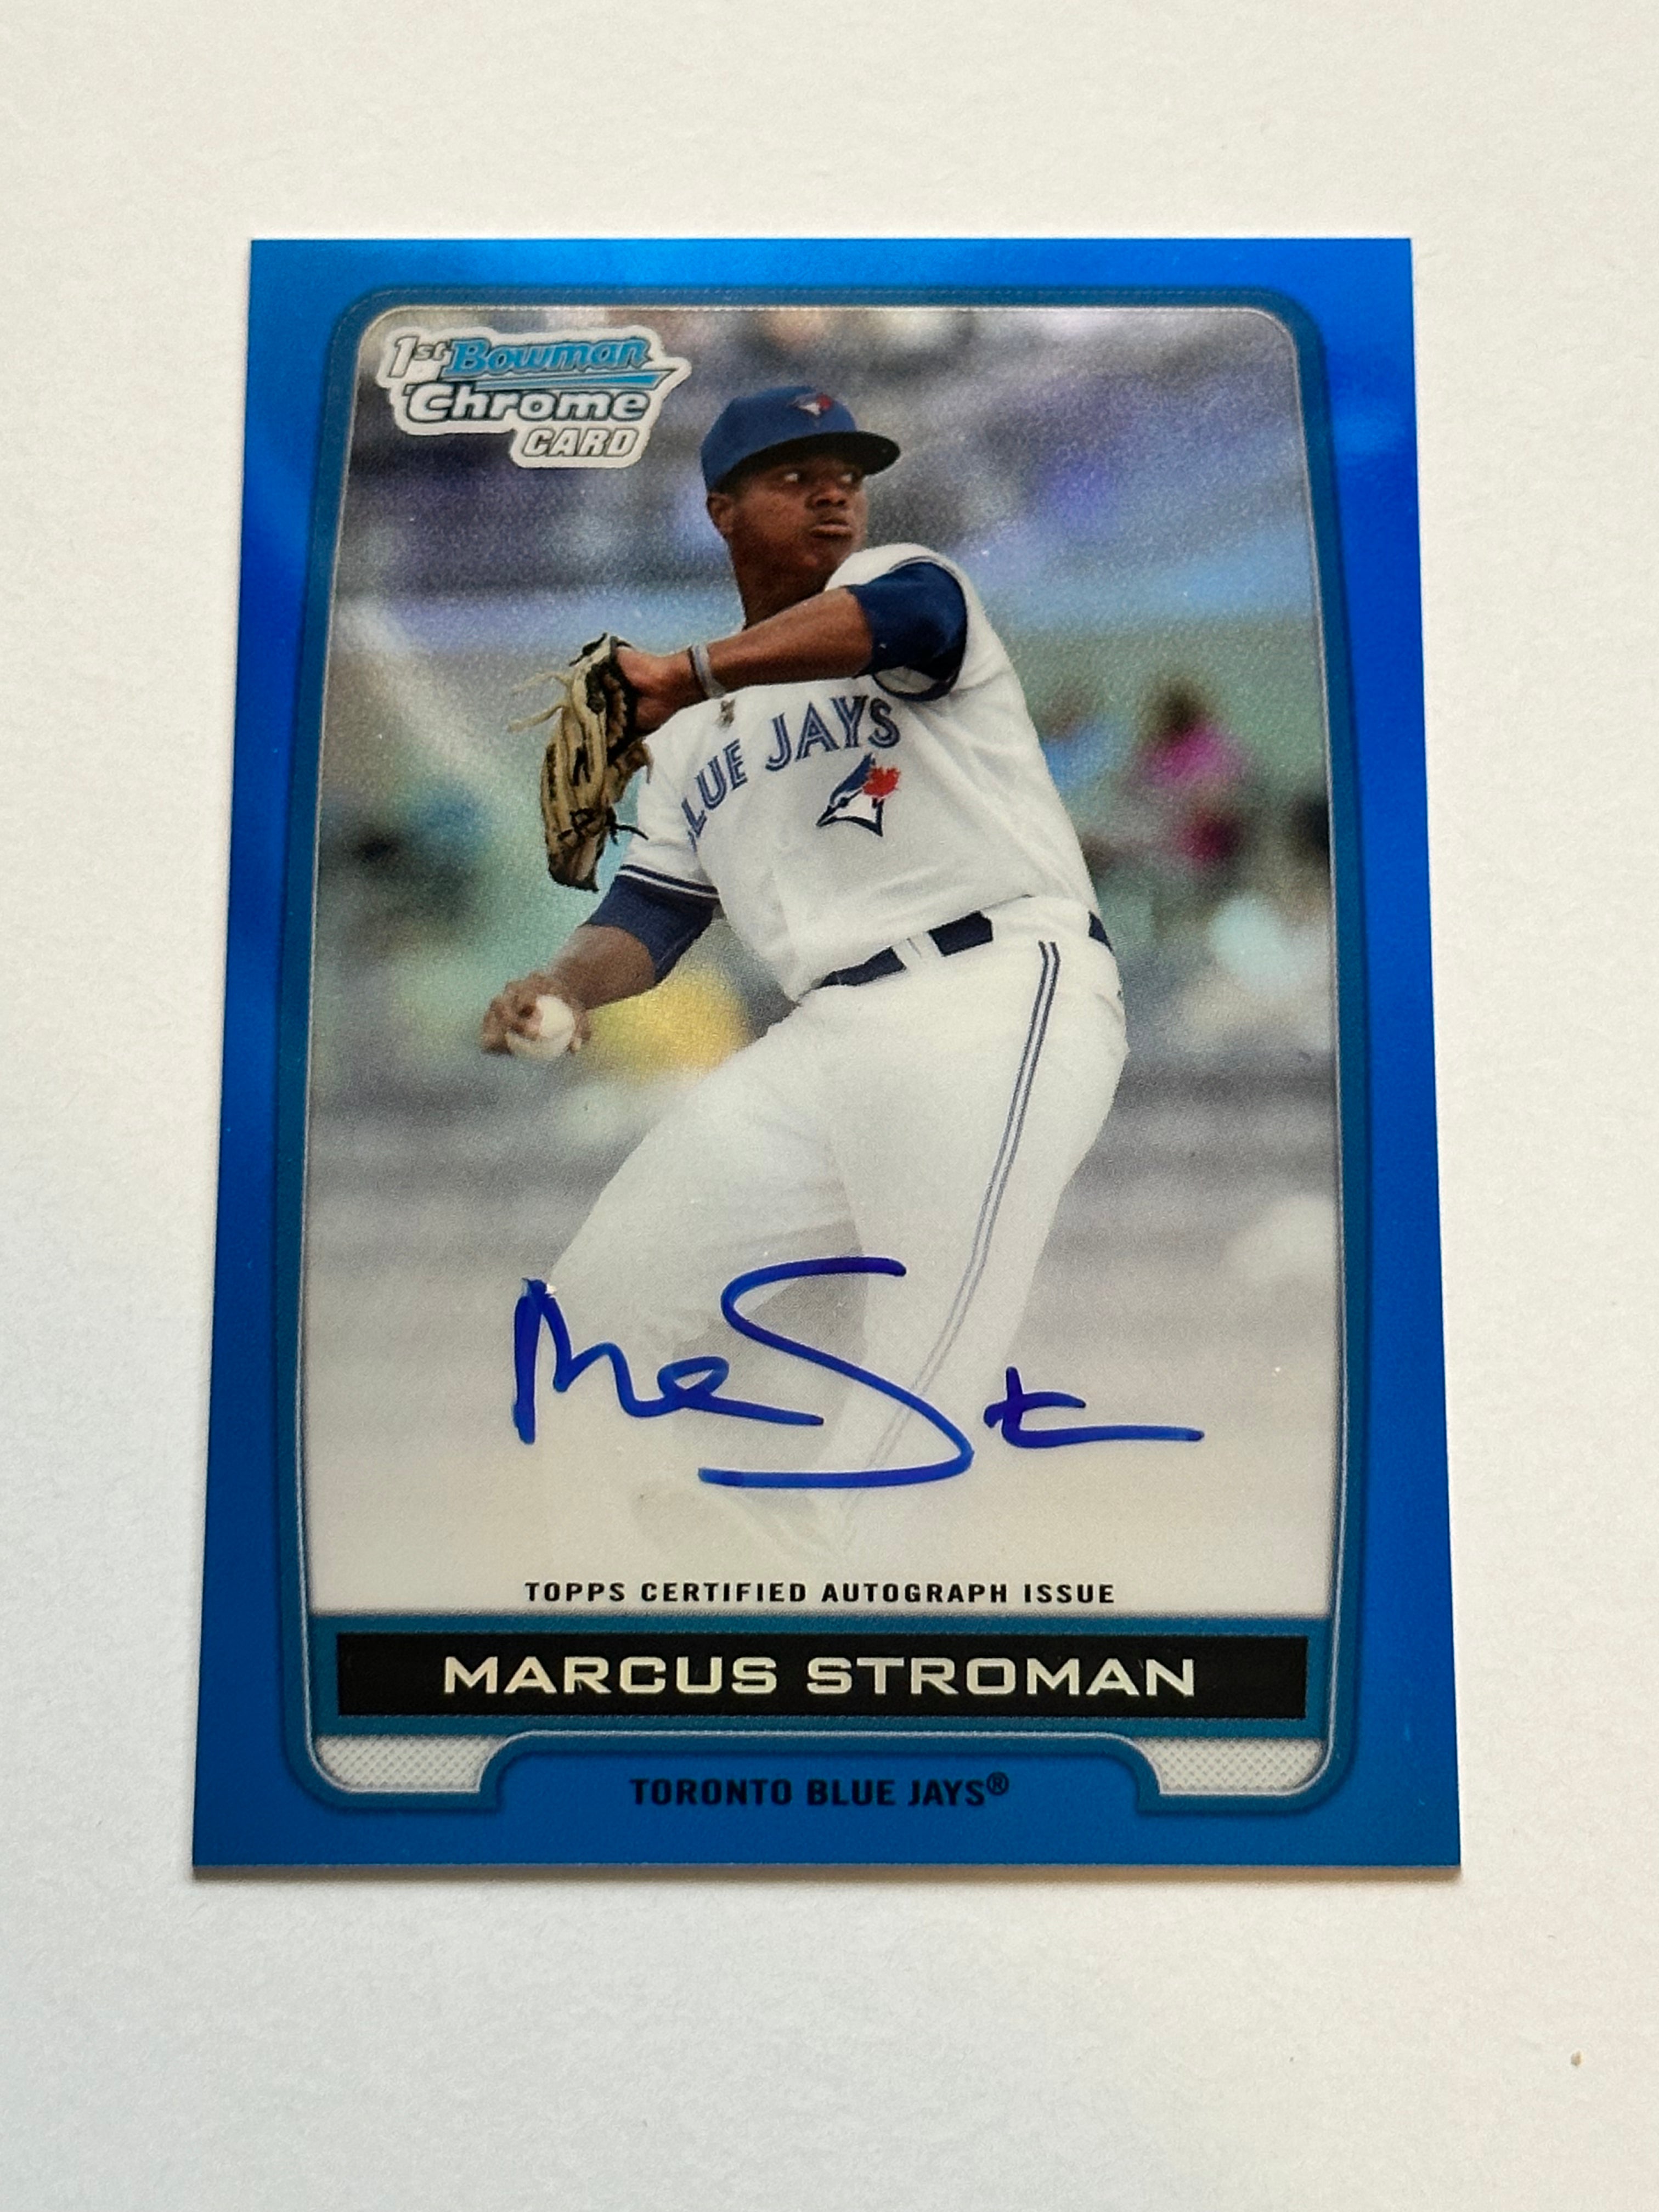 Toronto Blue jays Bowman Chrome Refractor autographed Marcus Stroman rookie baseball card 2012